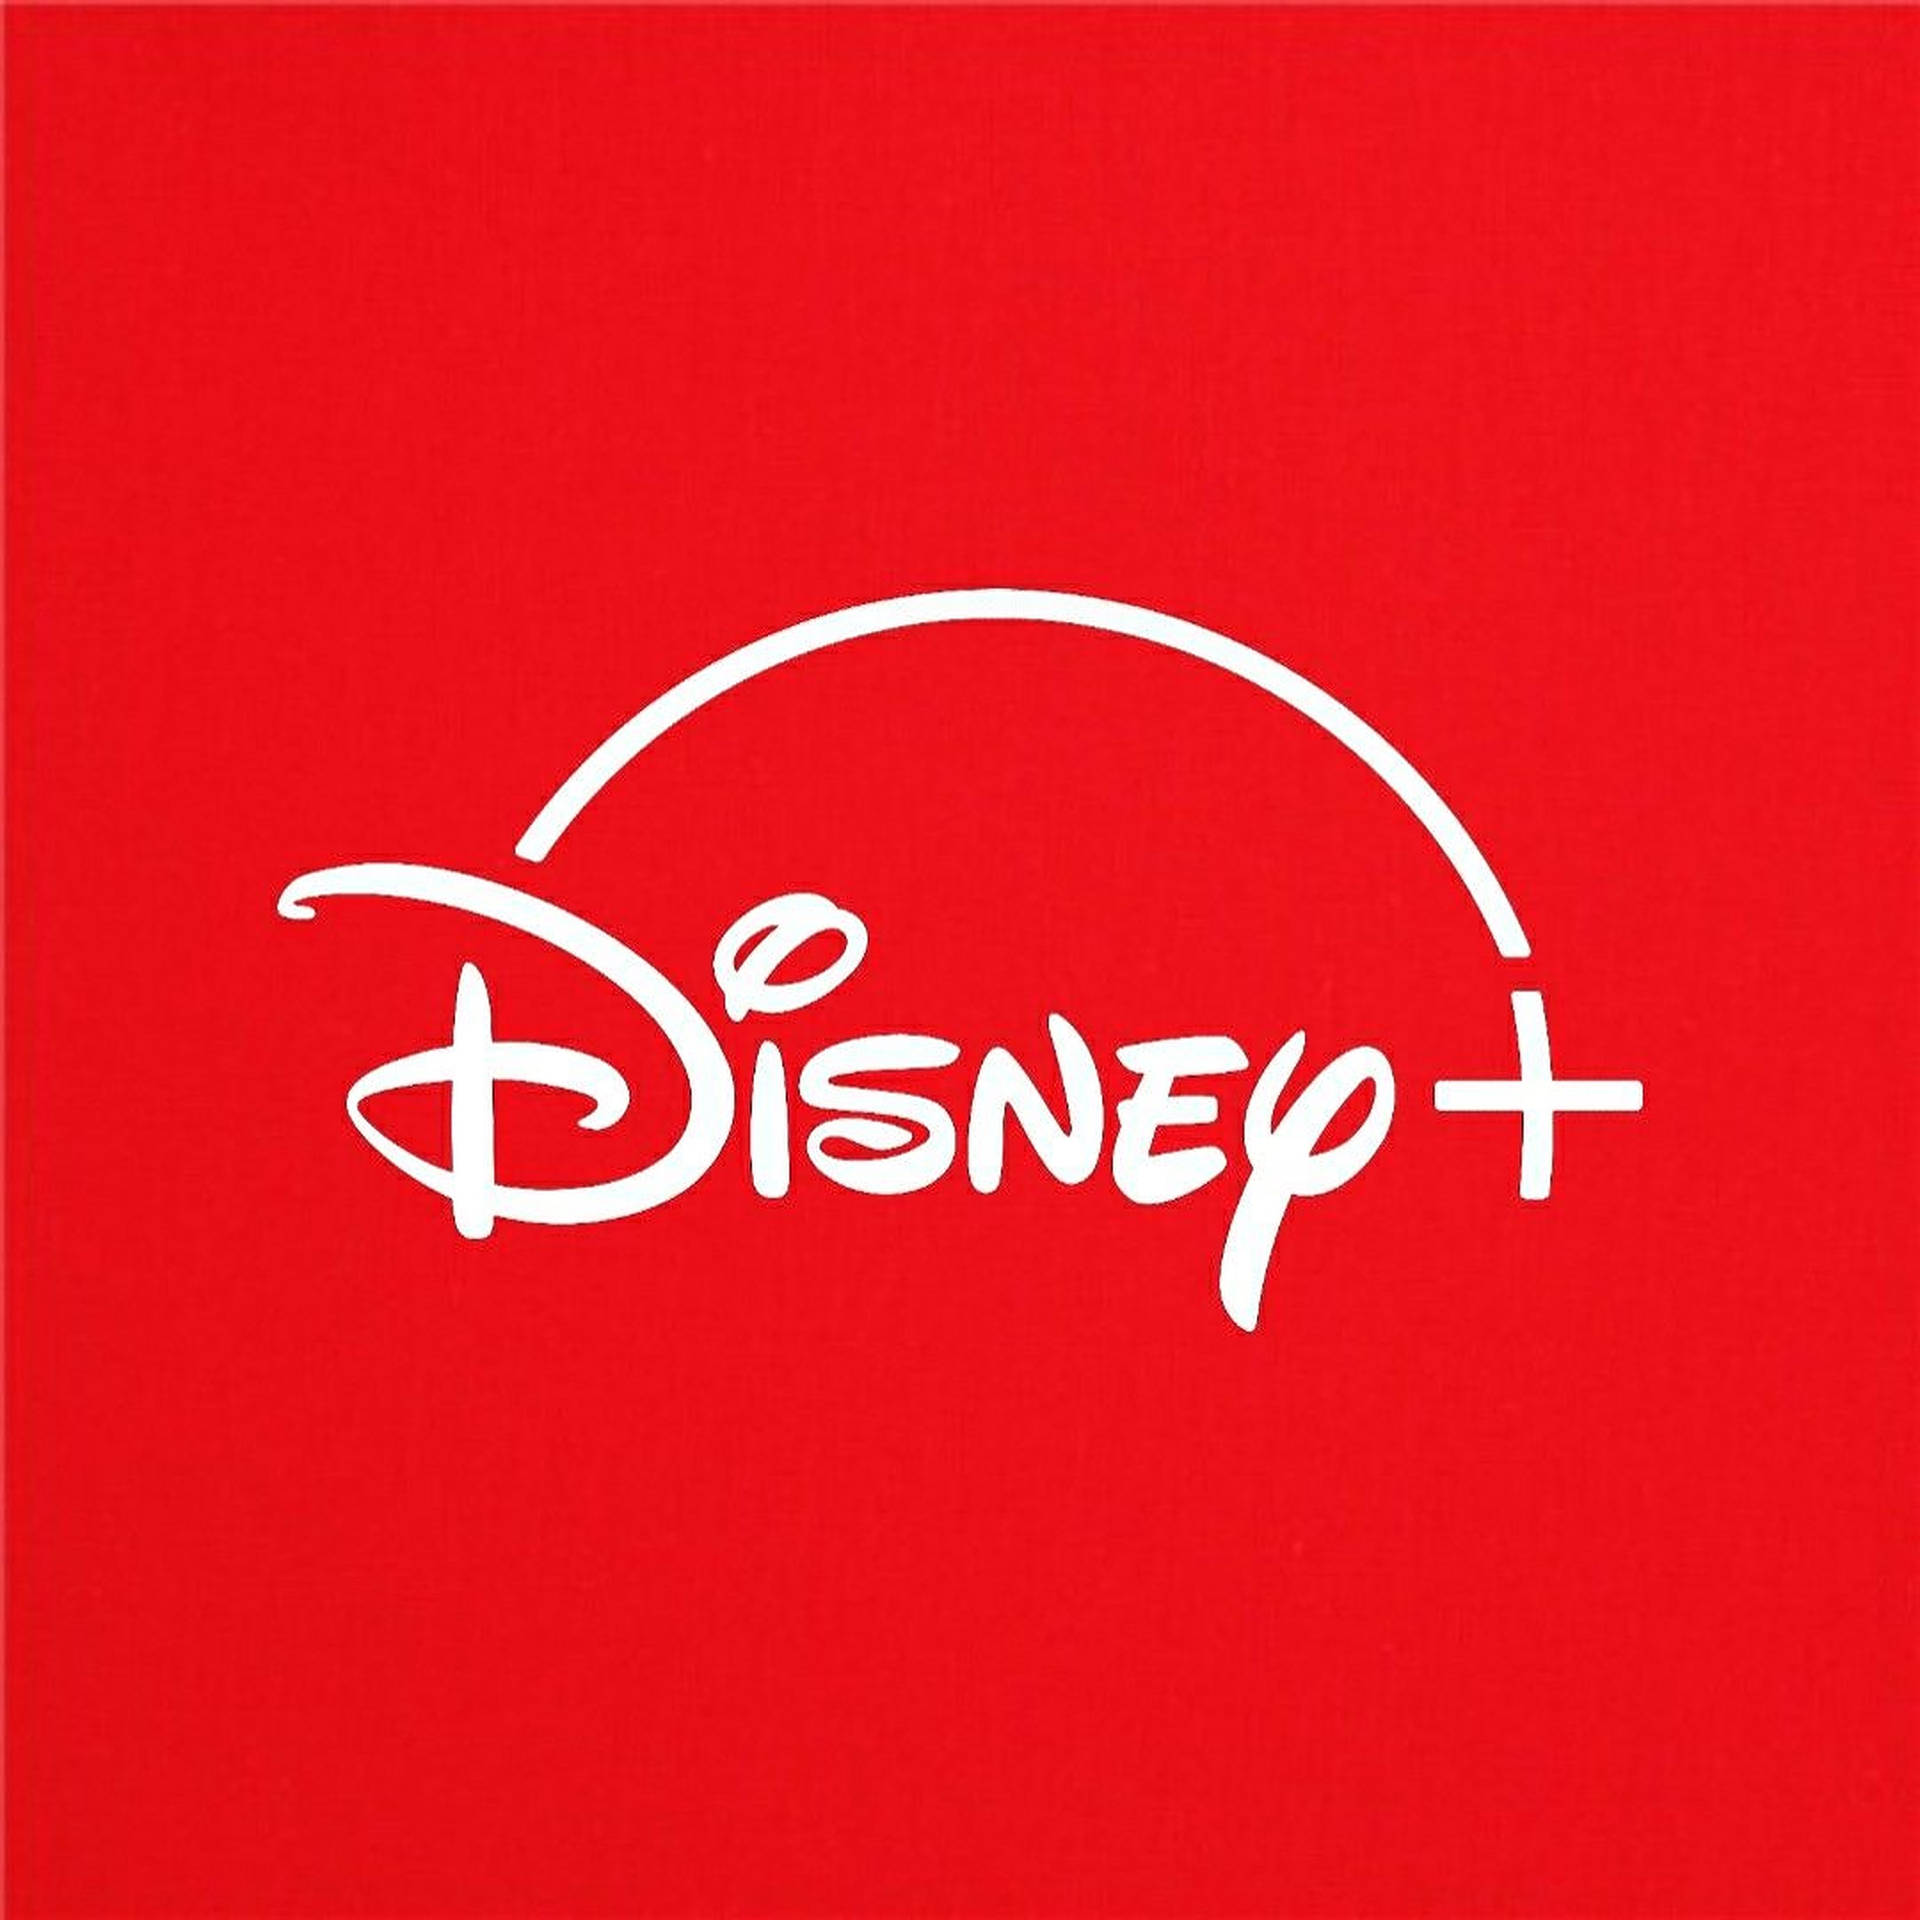 Disney Plus Red Logo Wallpaper